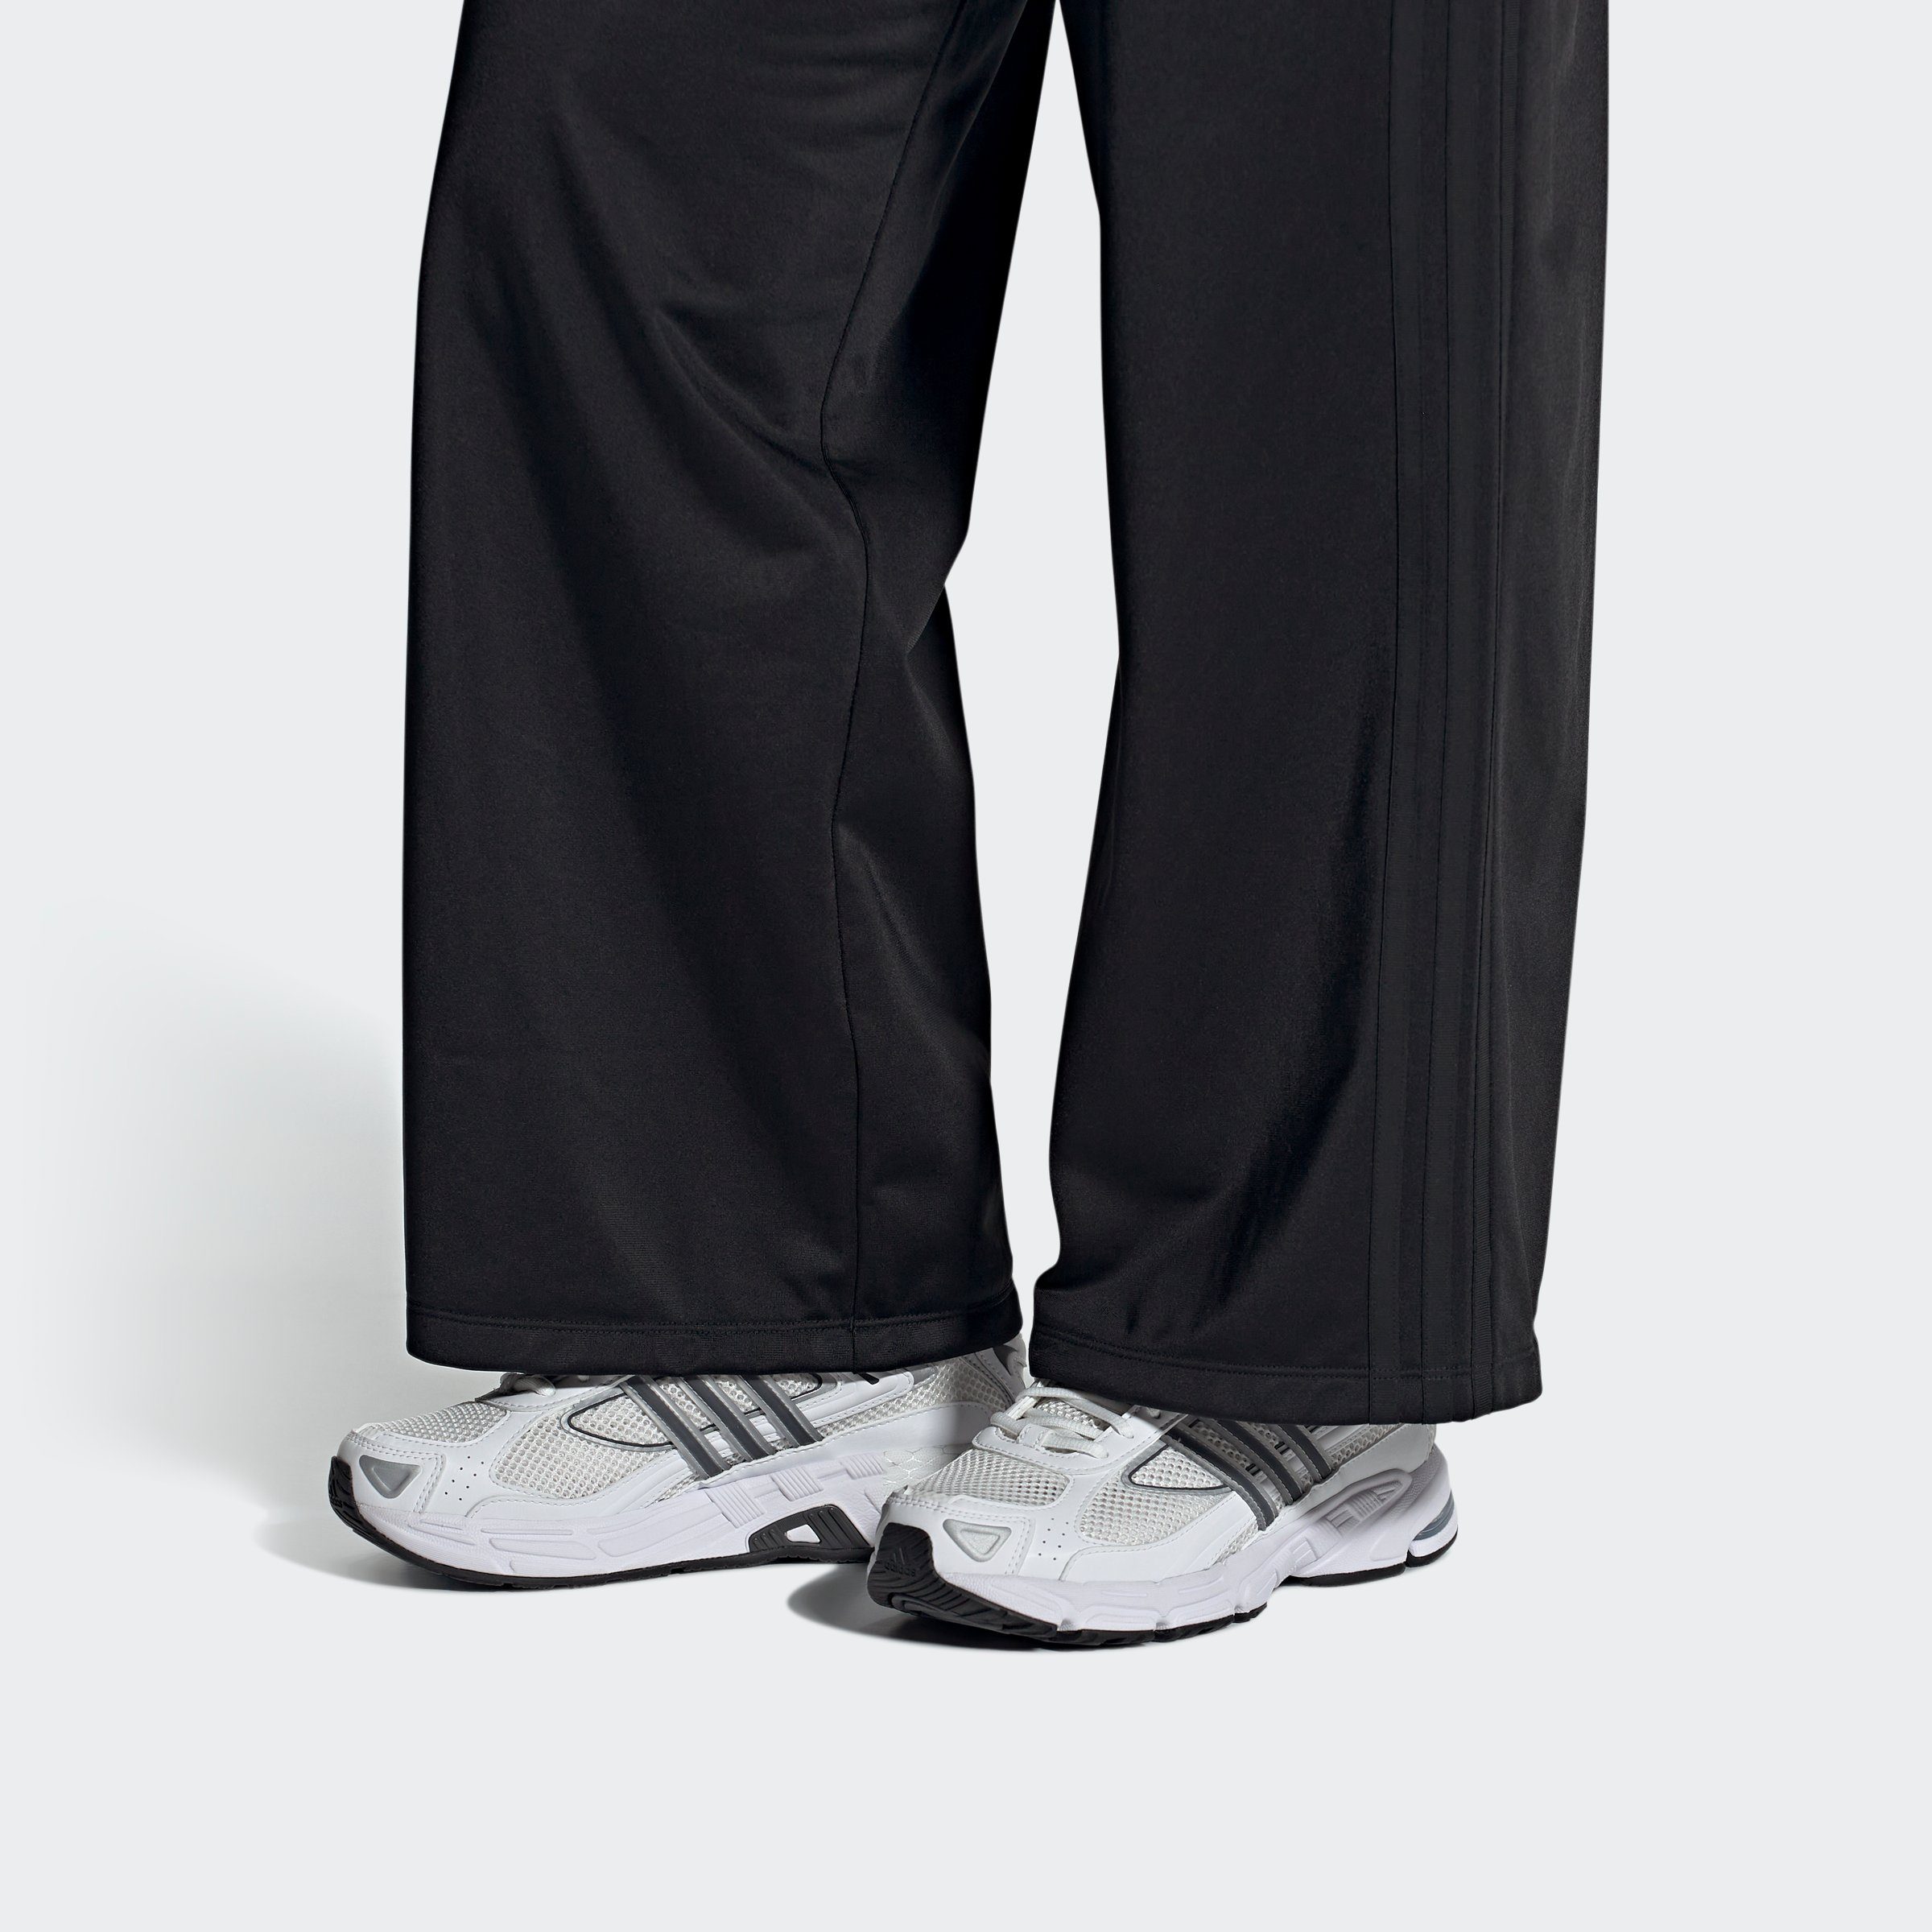 Grey Core Black Originals White Five adidas Sneaker Cloud / RESPONSE /